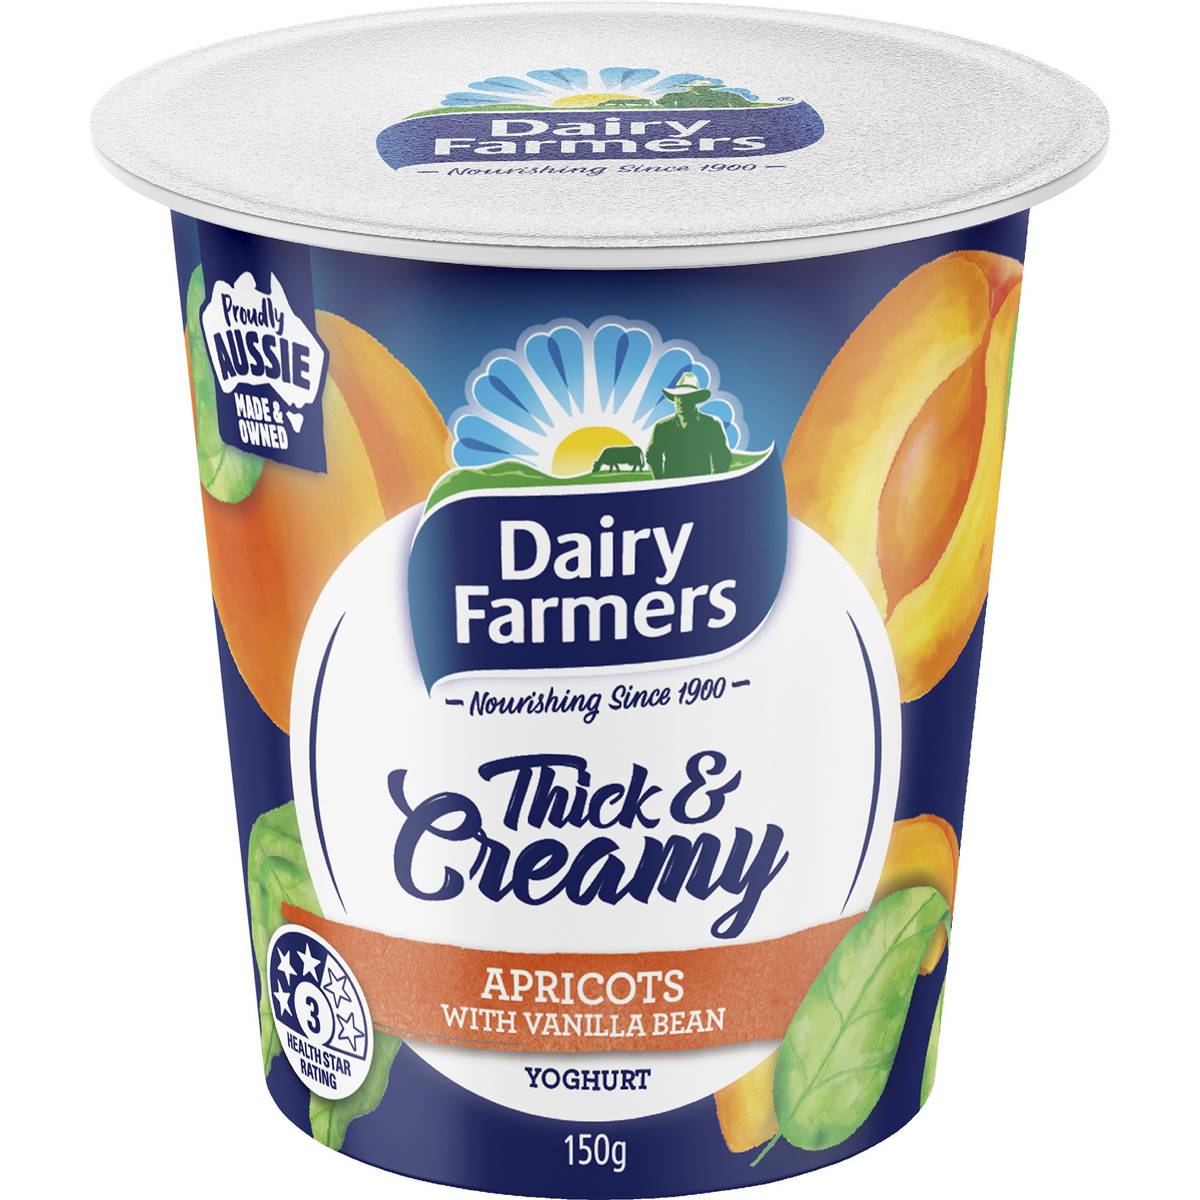 Calories in Dairy Farmers Thick & Creamy Apricot & Vanilla calcount